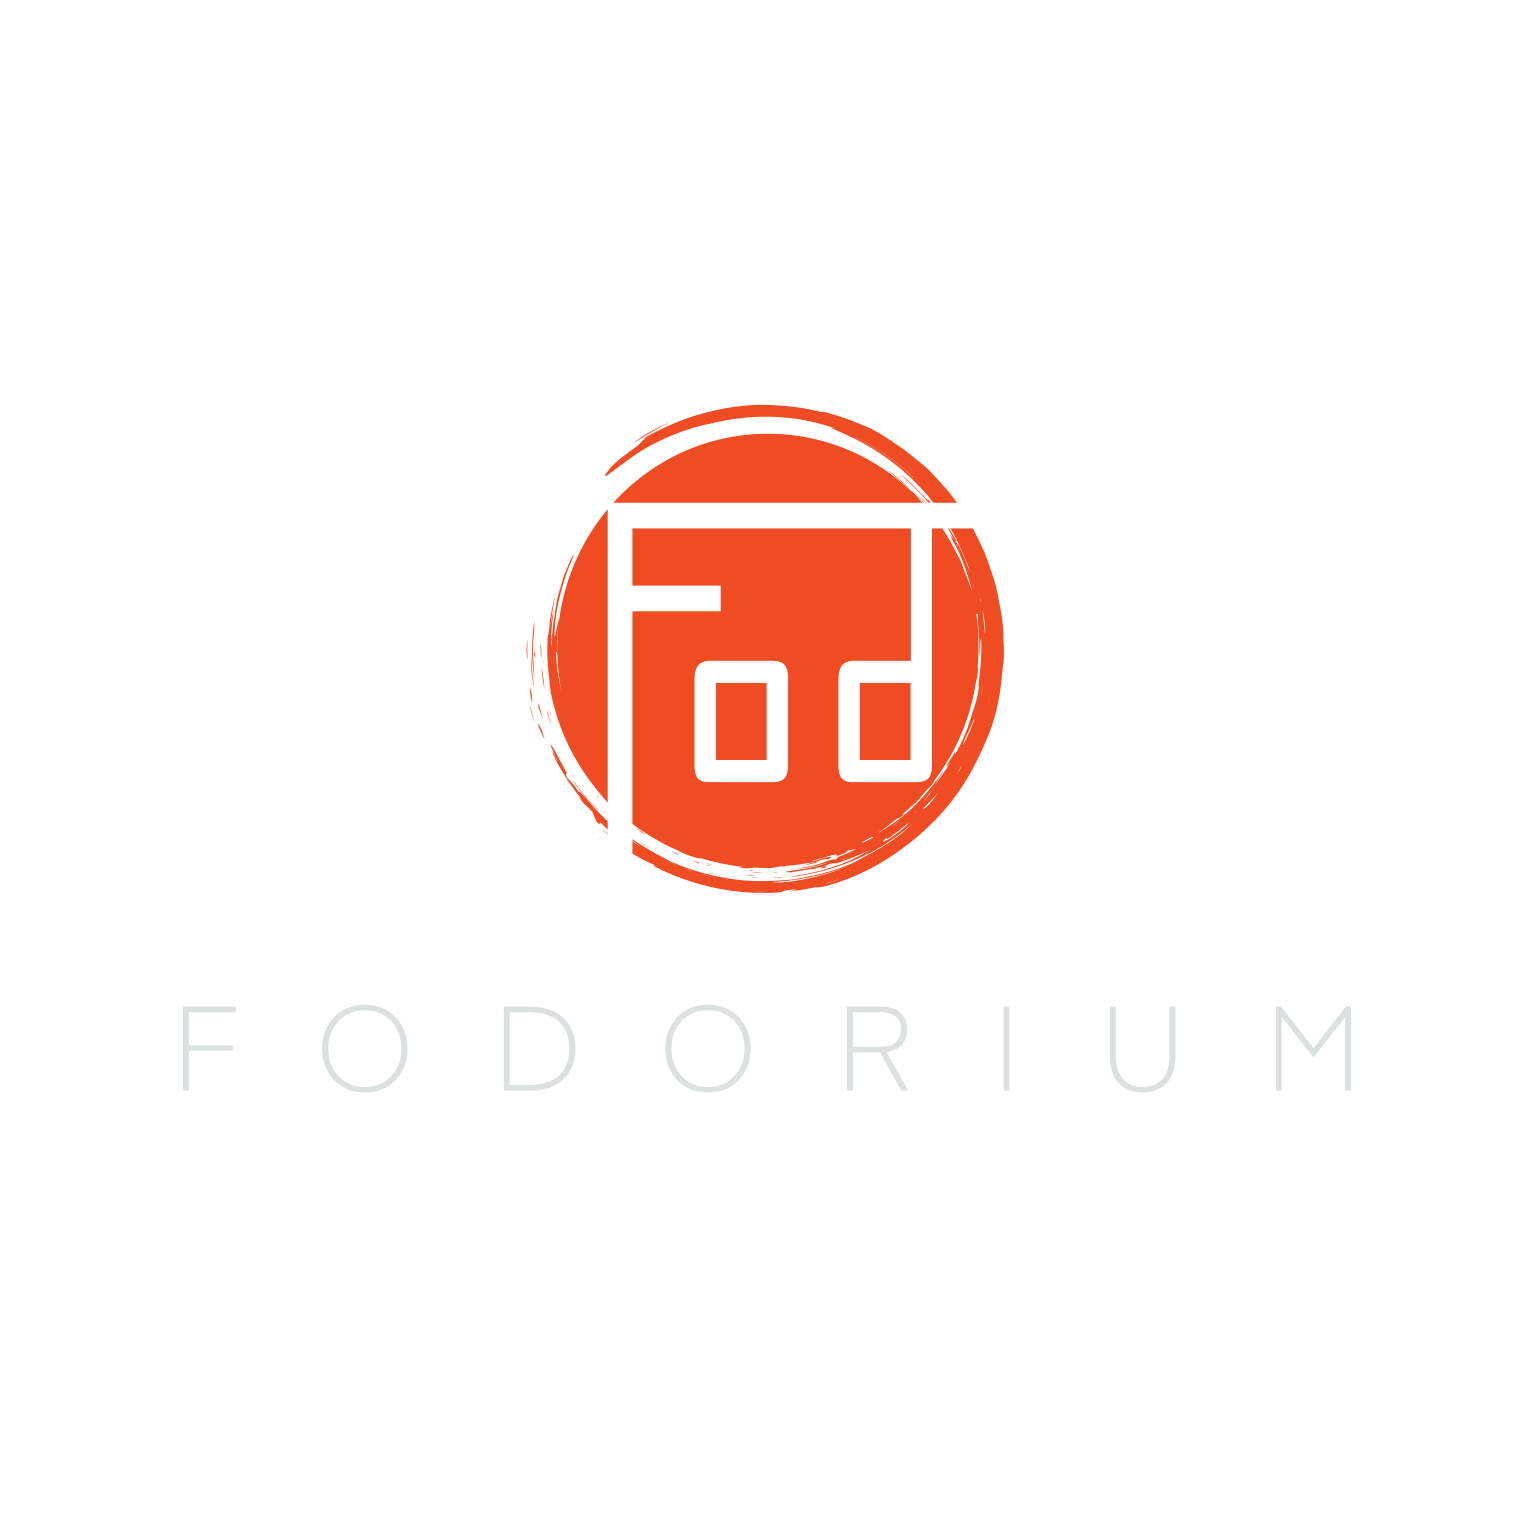 Fodorium Marketing Mures Content Creation Tartalomgyártás Creare de Conținut Branding Márkaépítés Ad campaigns Reklámkapmányok Branding și Creare de Conținut